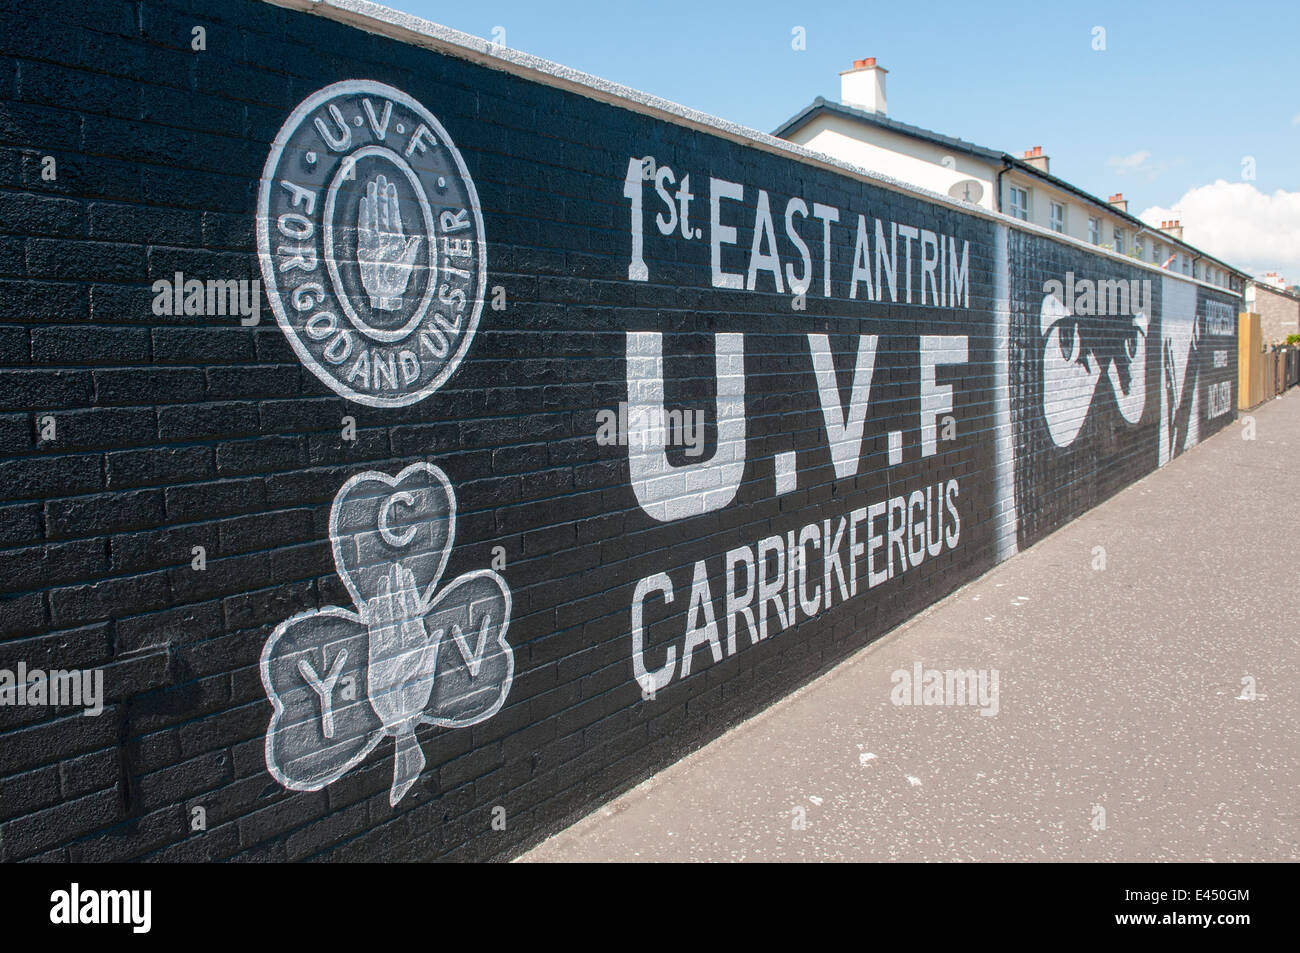 Mural on a wall in Carrickfergus '1st East Antrim UVF, Carrickfergus' Stock Photo